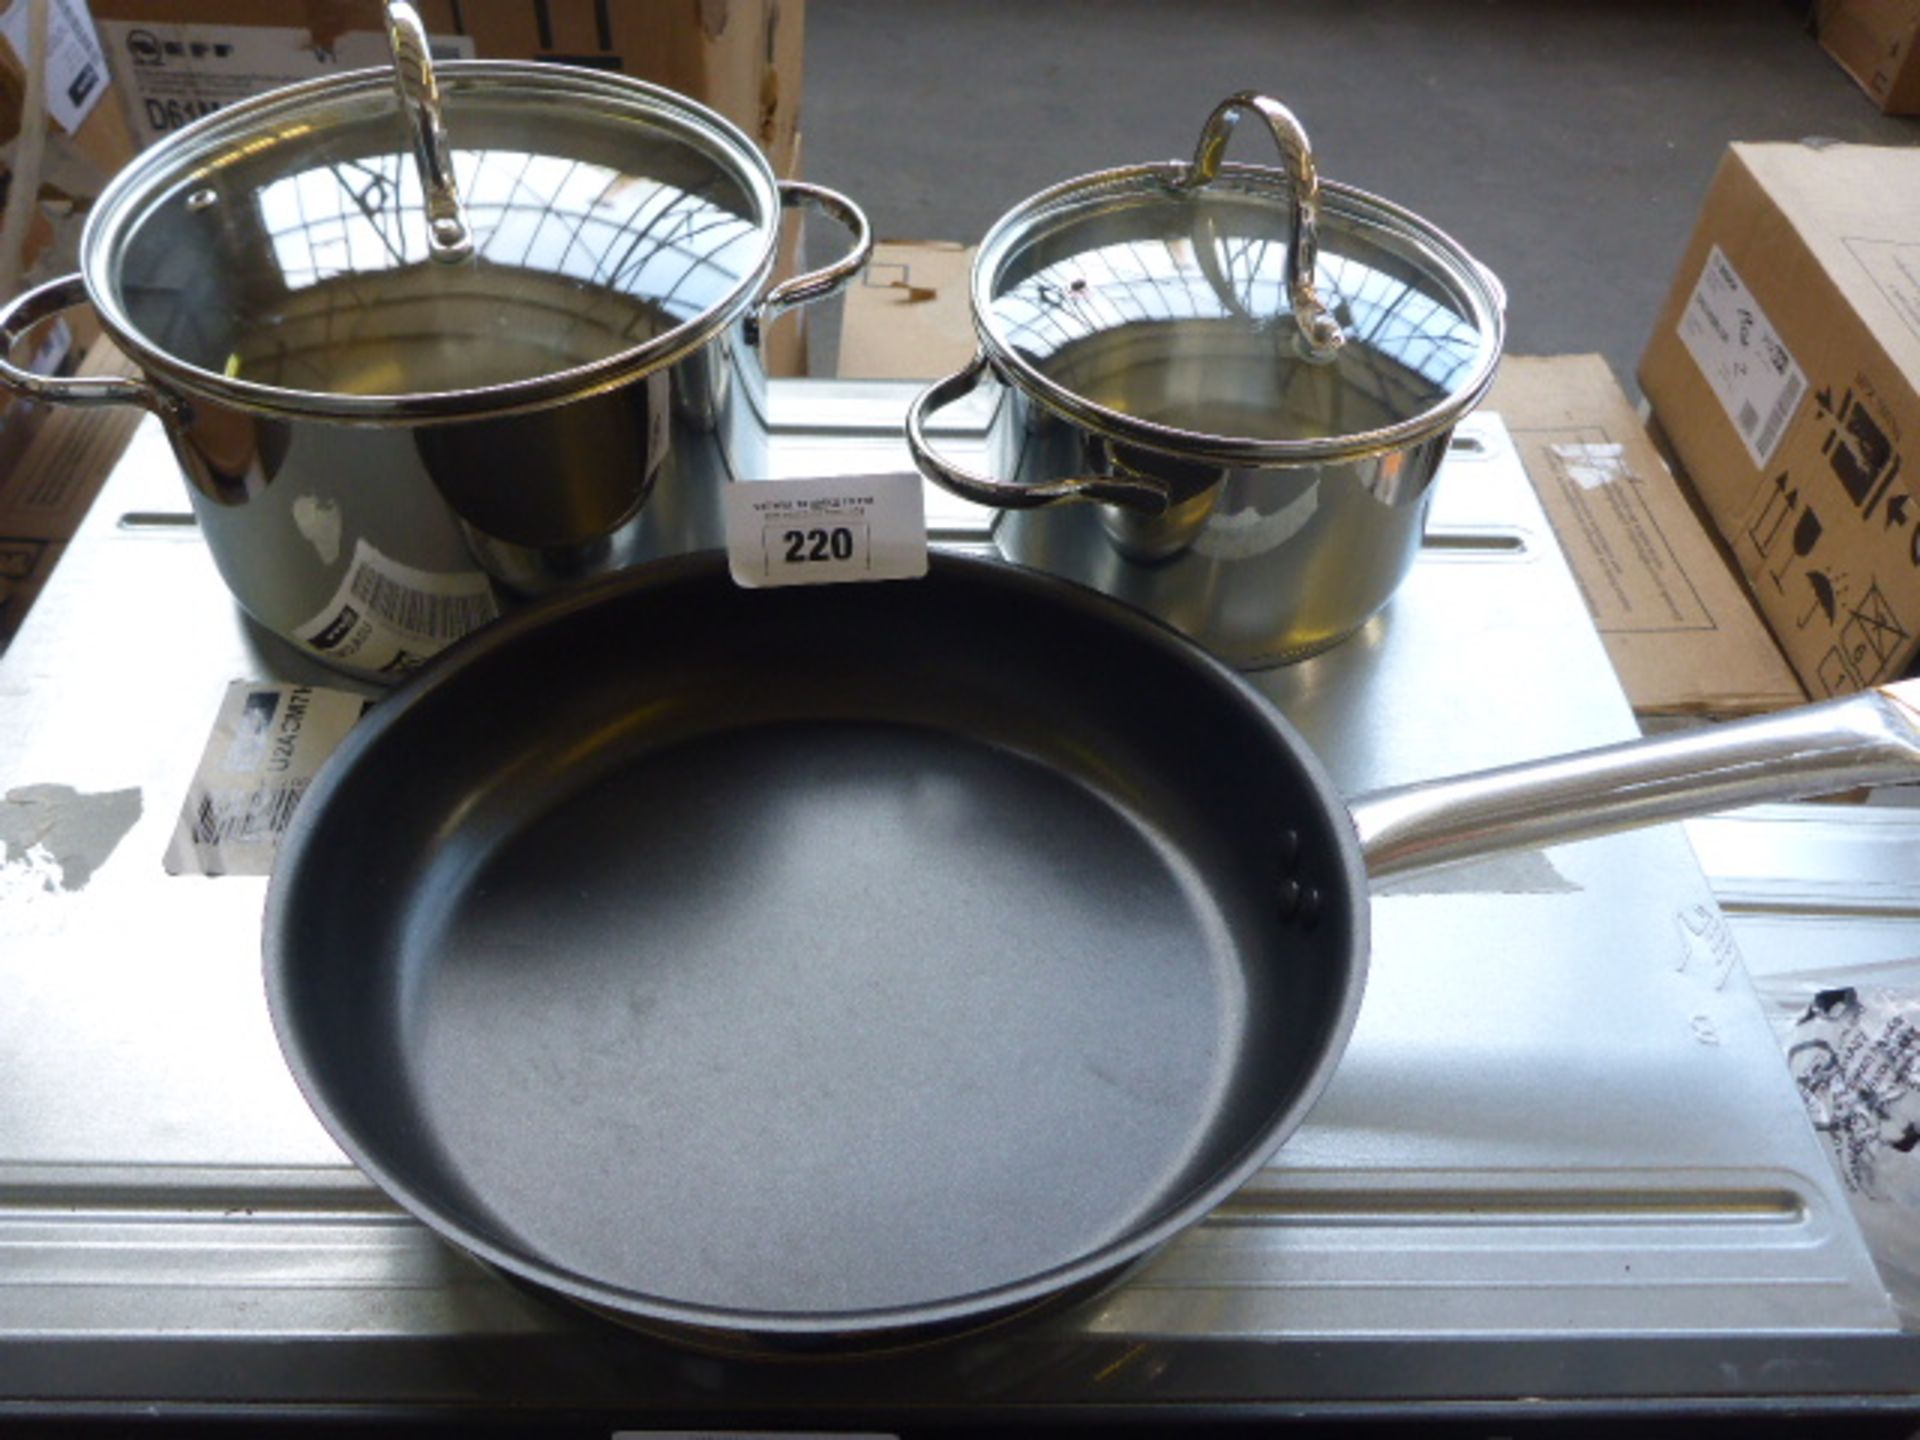 HZ9SE030--B Siemens Set of 2 pots and 1 pan